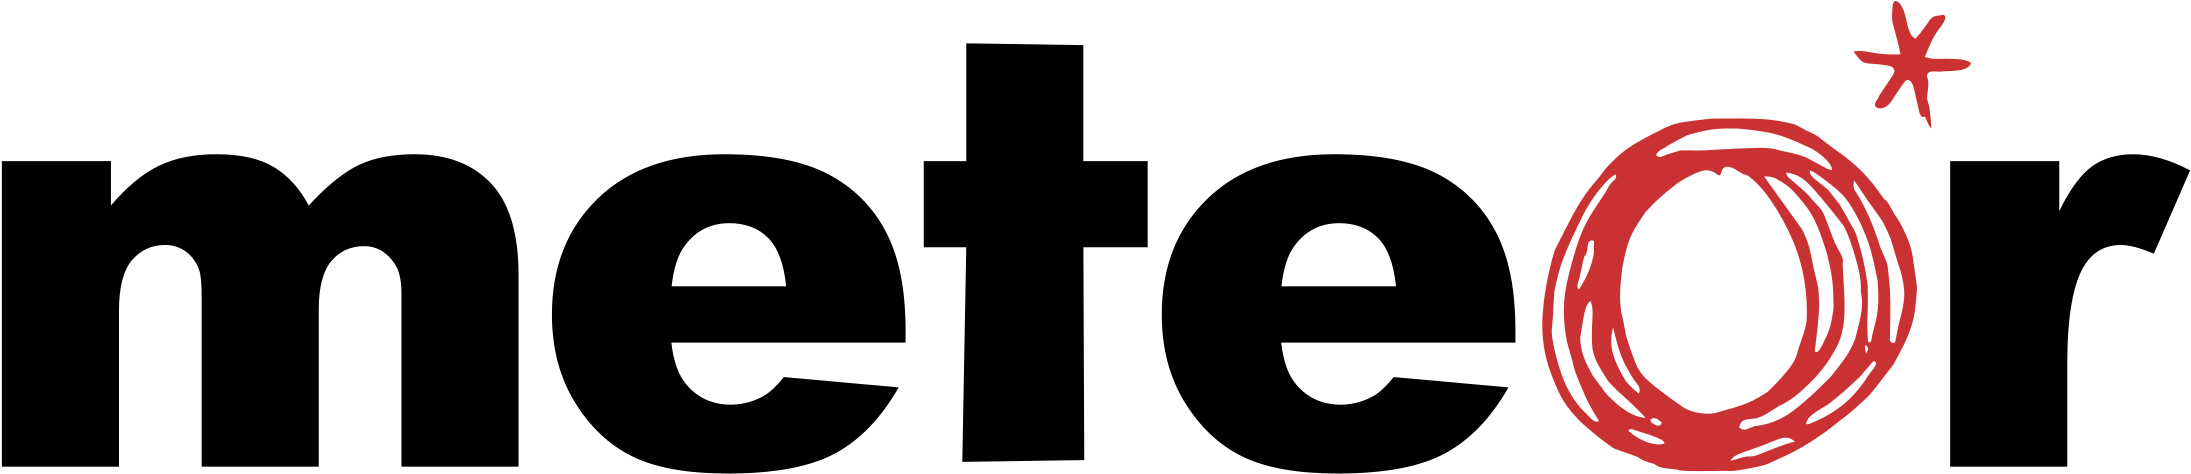 Meteor Logo Design PNG